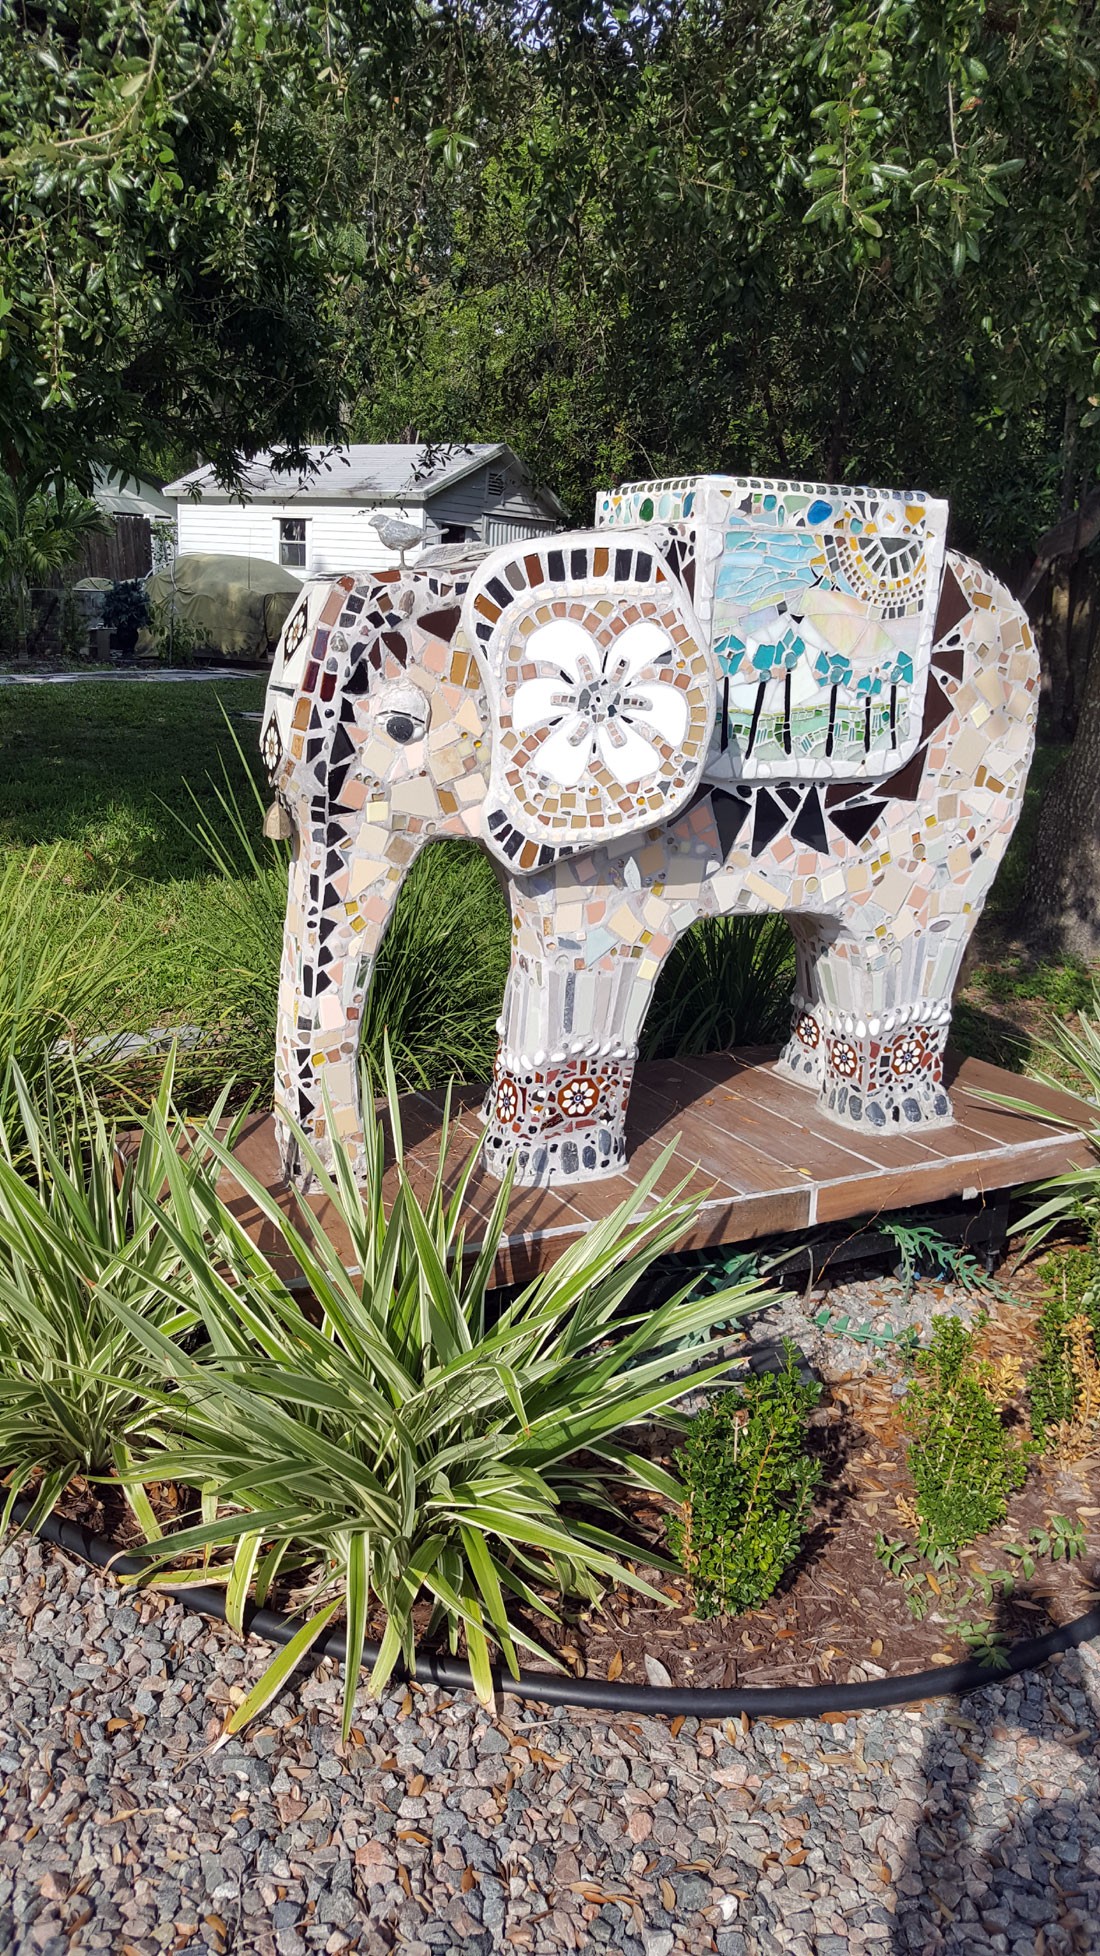 Elephant Mosaic Sculpture